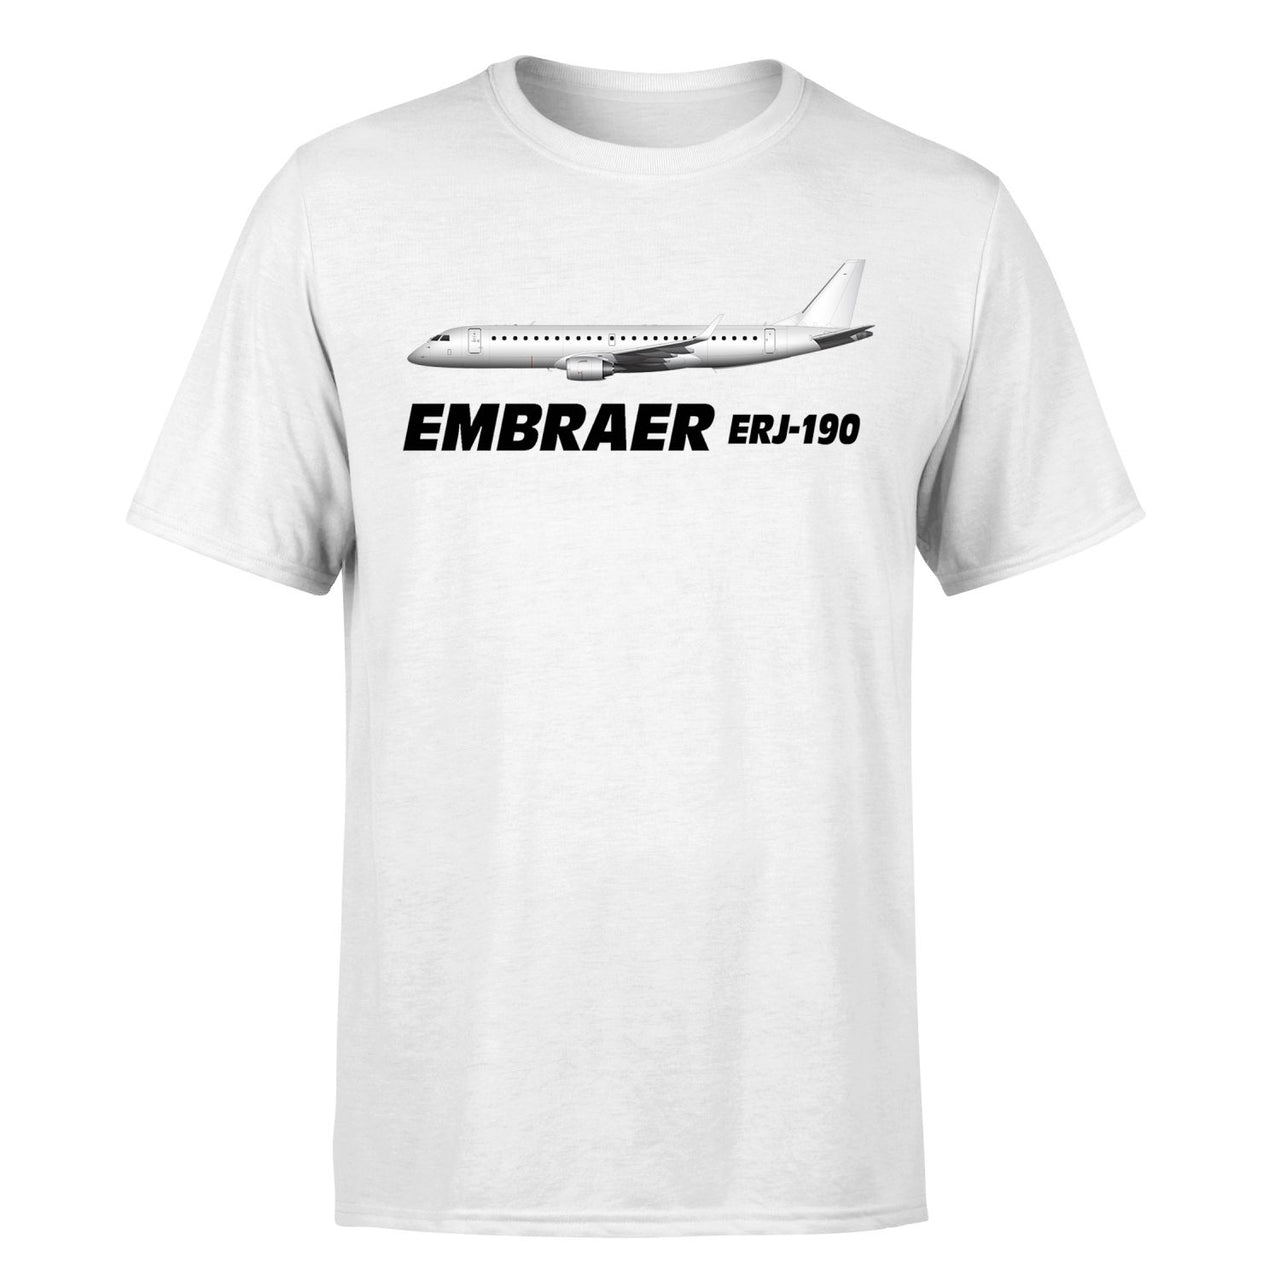 The Embraer ERJ-190 Designed T-Shirts